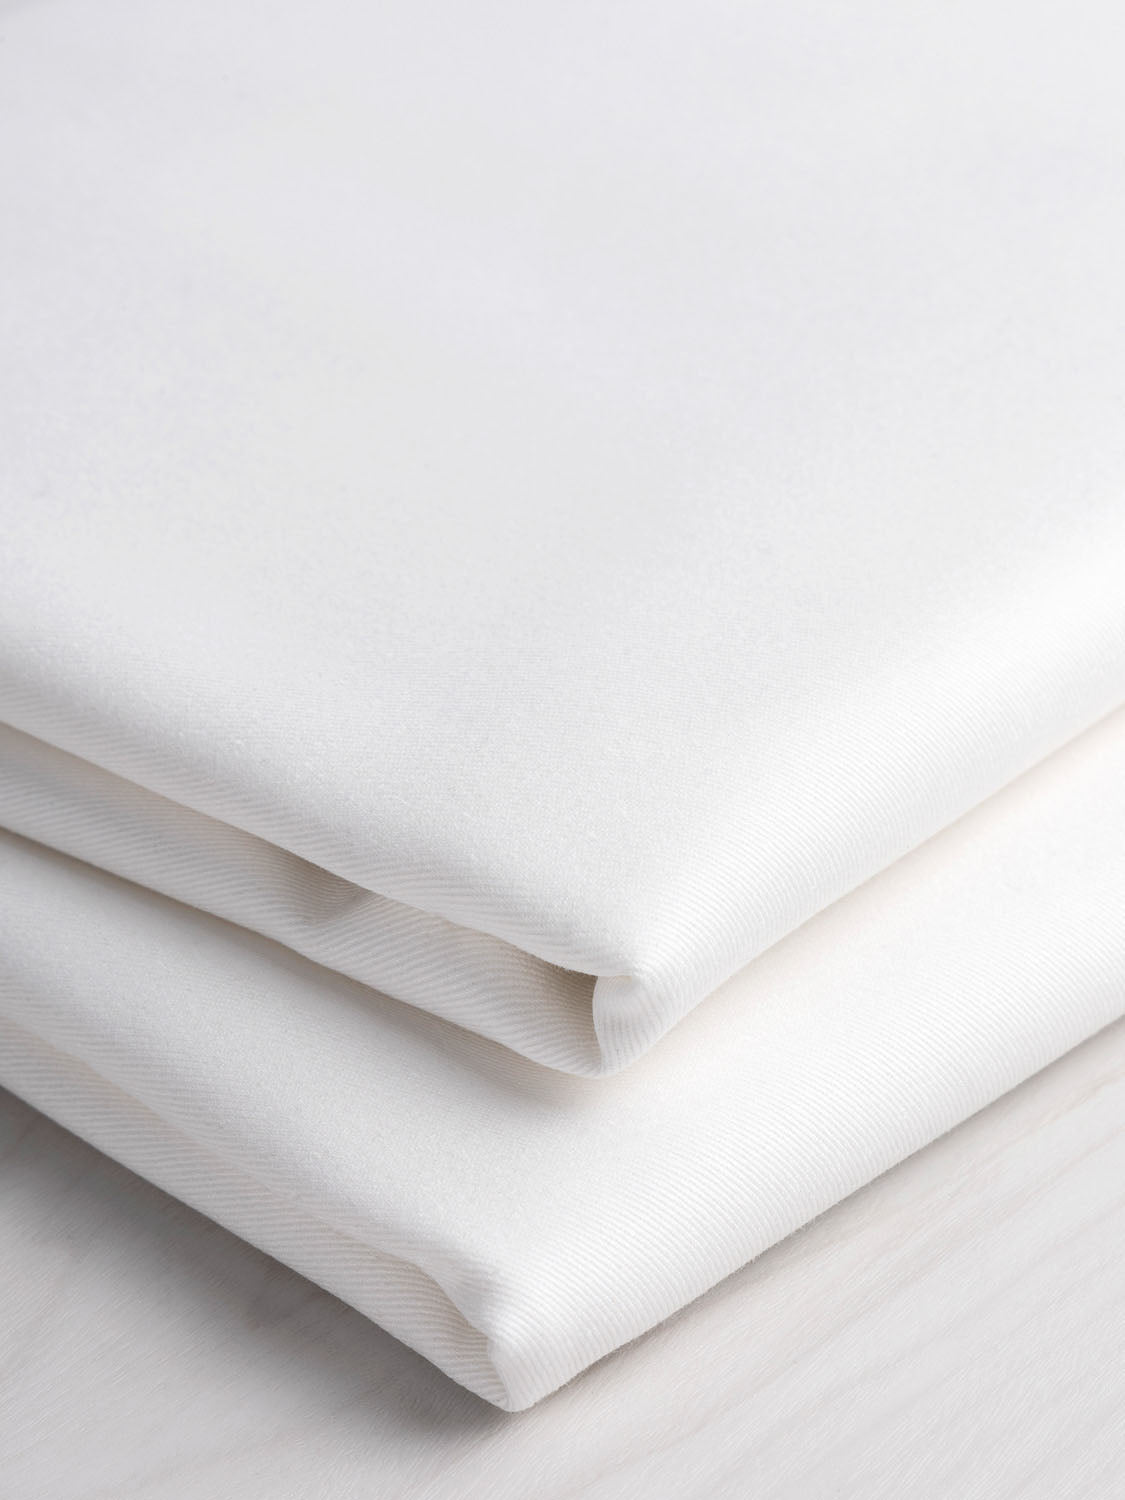 All-Clad Textiles Cotton Twill Silicone Professional 600 Degree